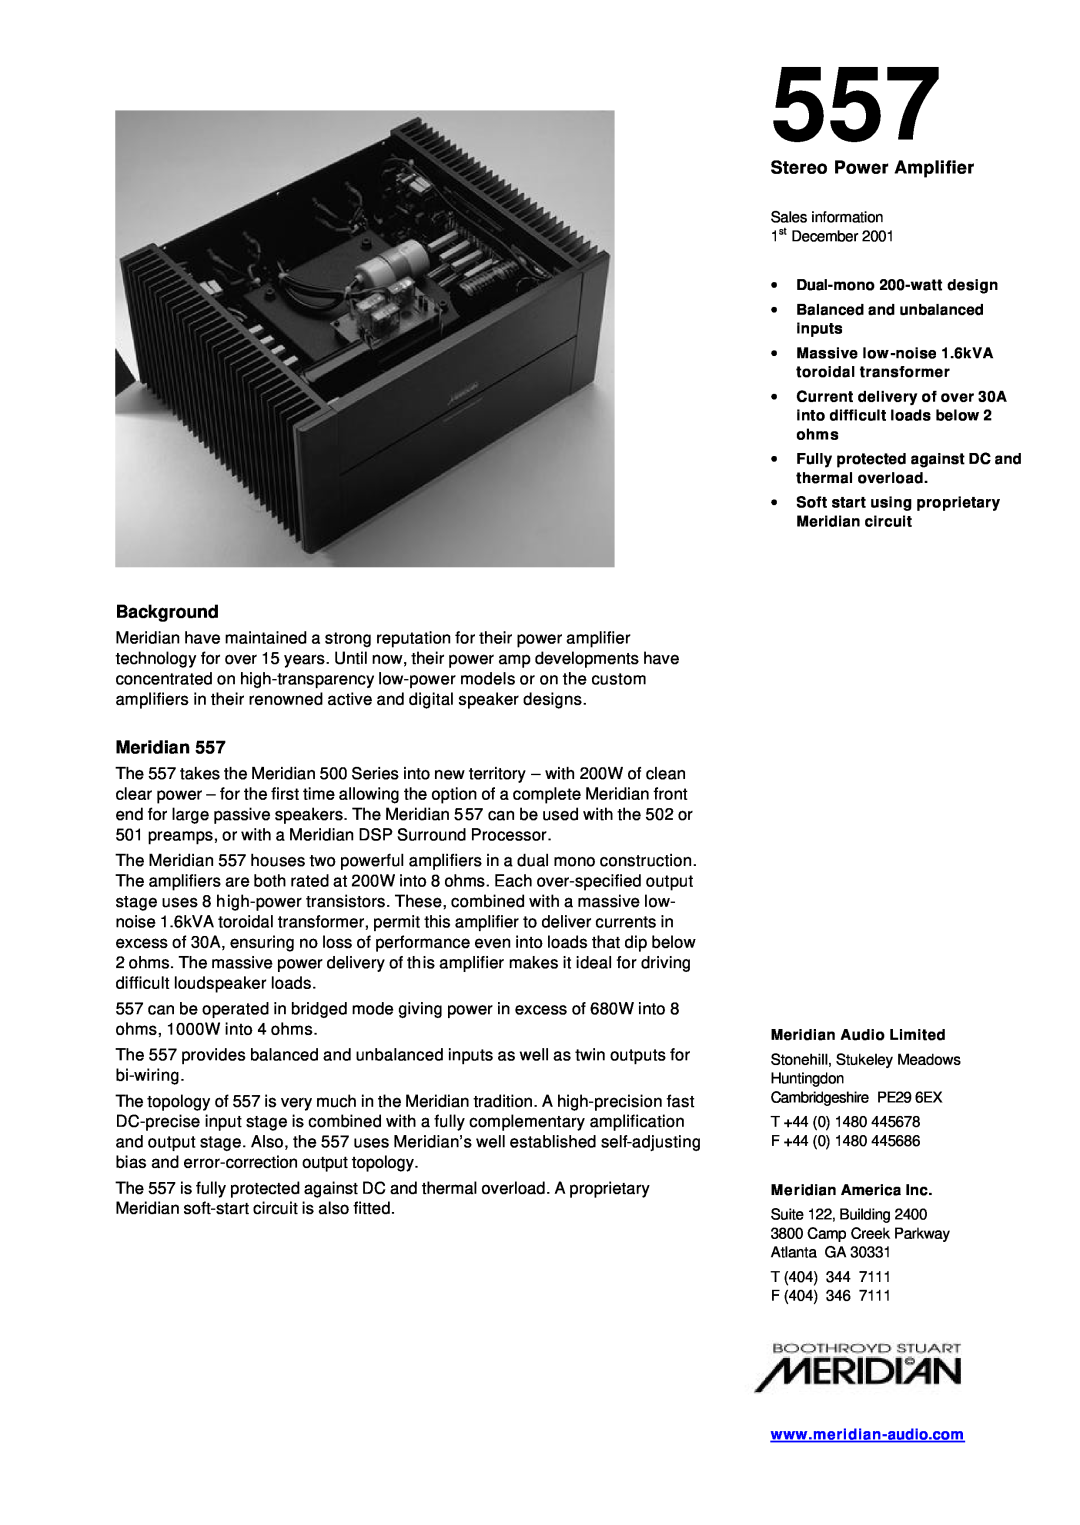 Meridian America 557 manual Background, Stereo Power Amplifier, ∙Dual-mono 200-wattdesign, Meridian America Inc 